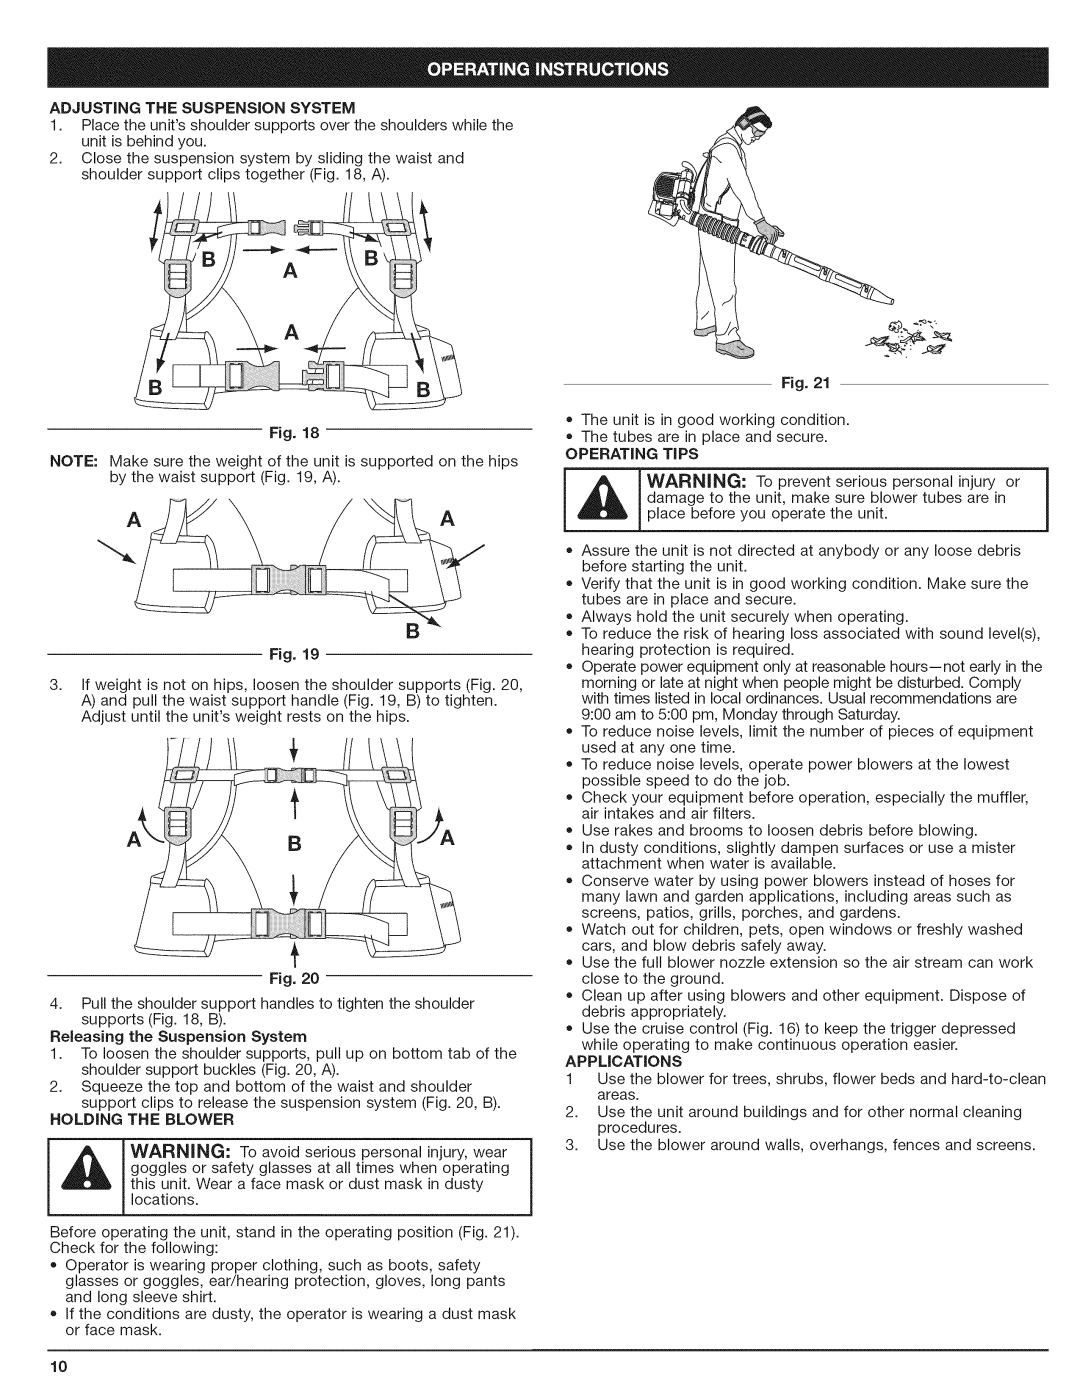 Craftsman 316.794801 manual Adjusting The Suspension System, Holding The Blower 